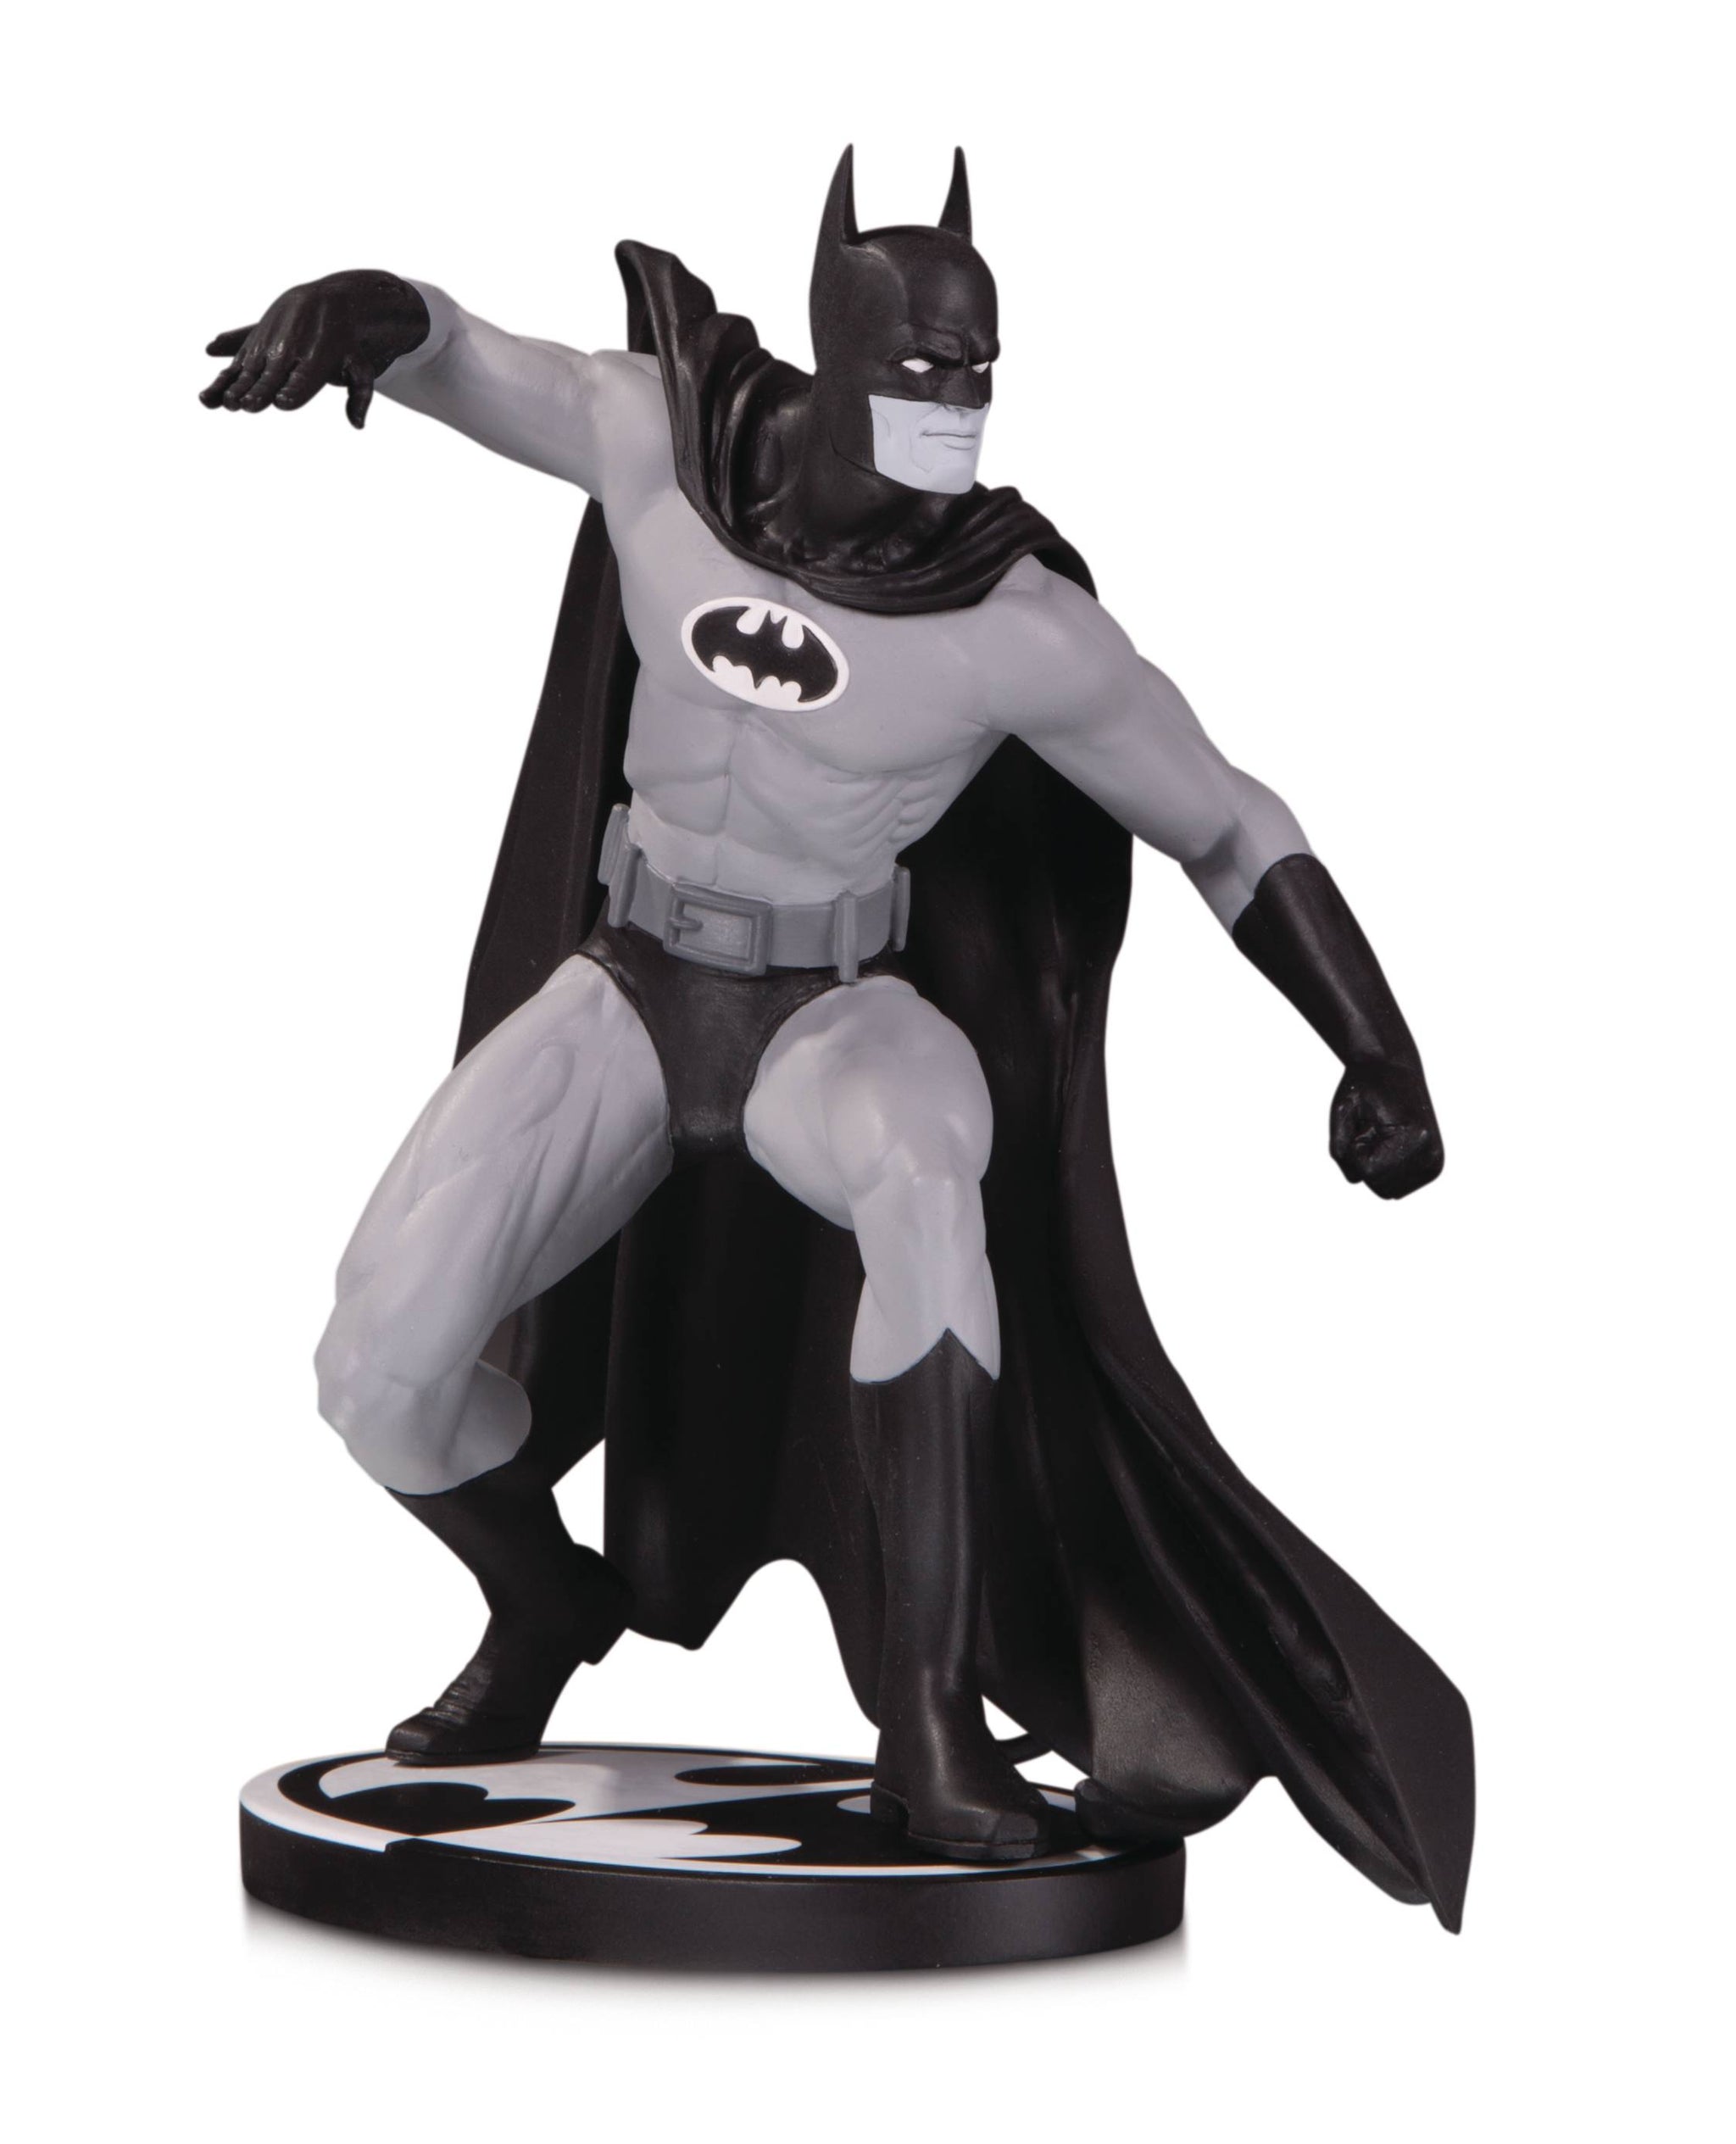 White batman. Белый Бэтмен. DC Collectibles Batman: Black & White collection. Статуя Бэтмена. DC Batman Black White Toy collection.